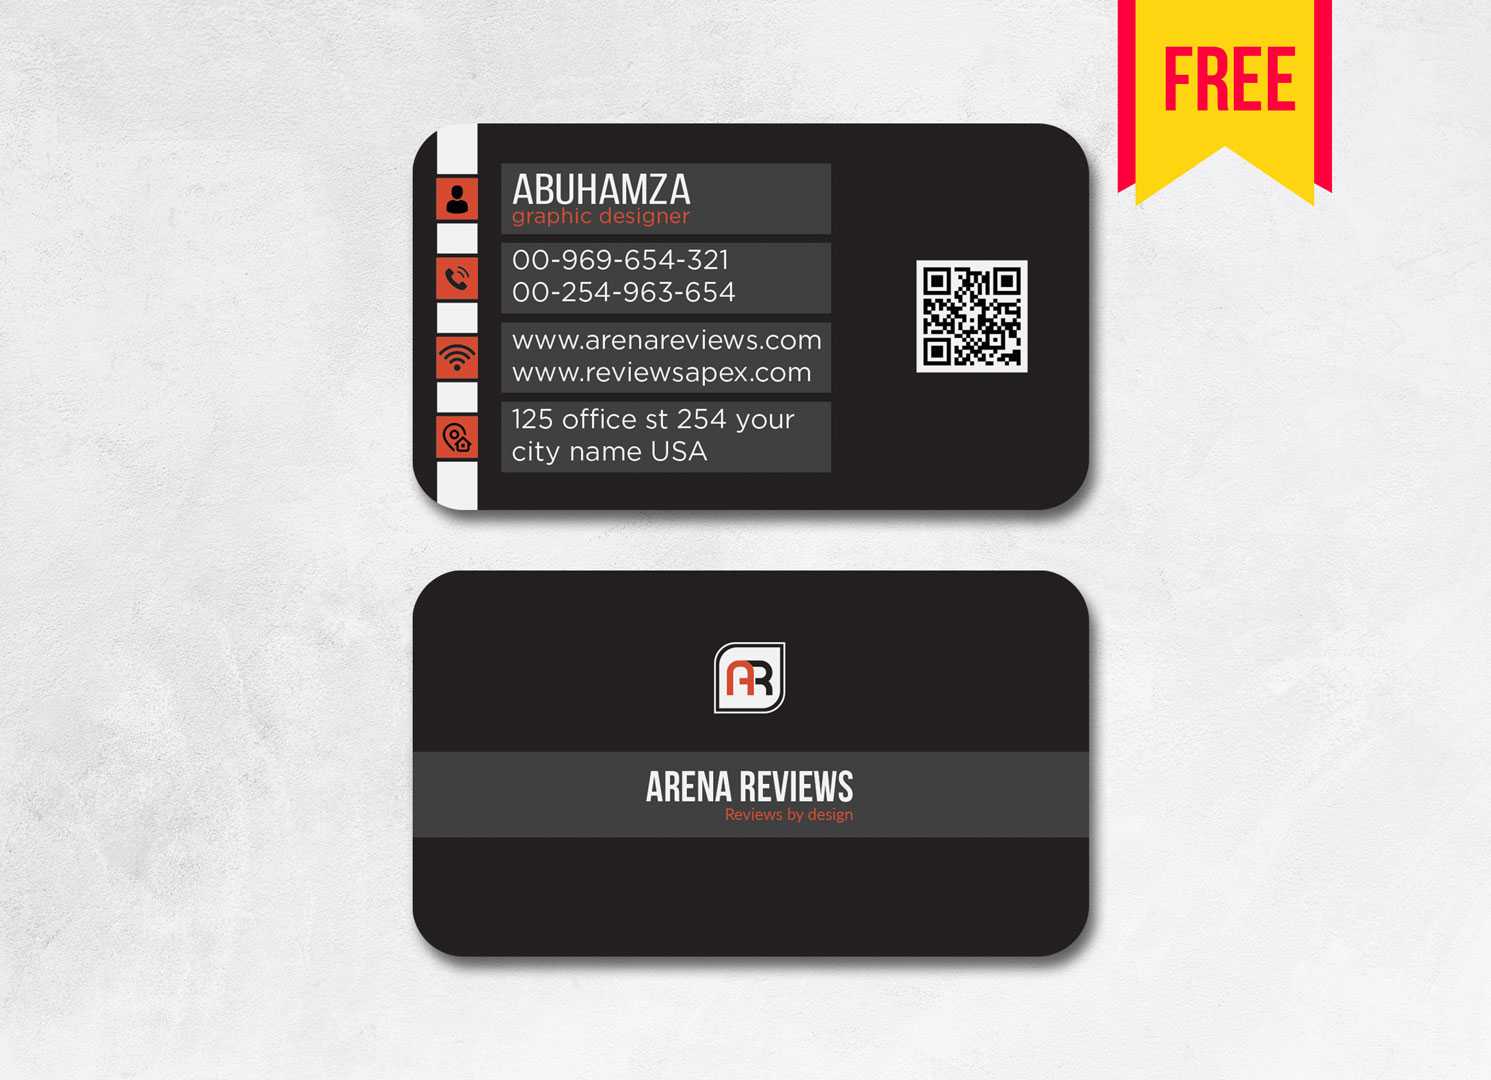 Dark Business Card Template Psd File | Free Download With Business Card Template Photoshop Cs6